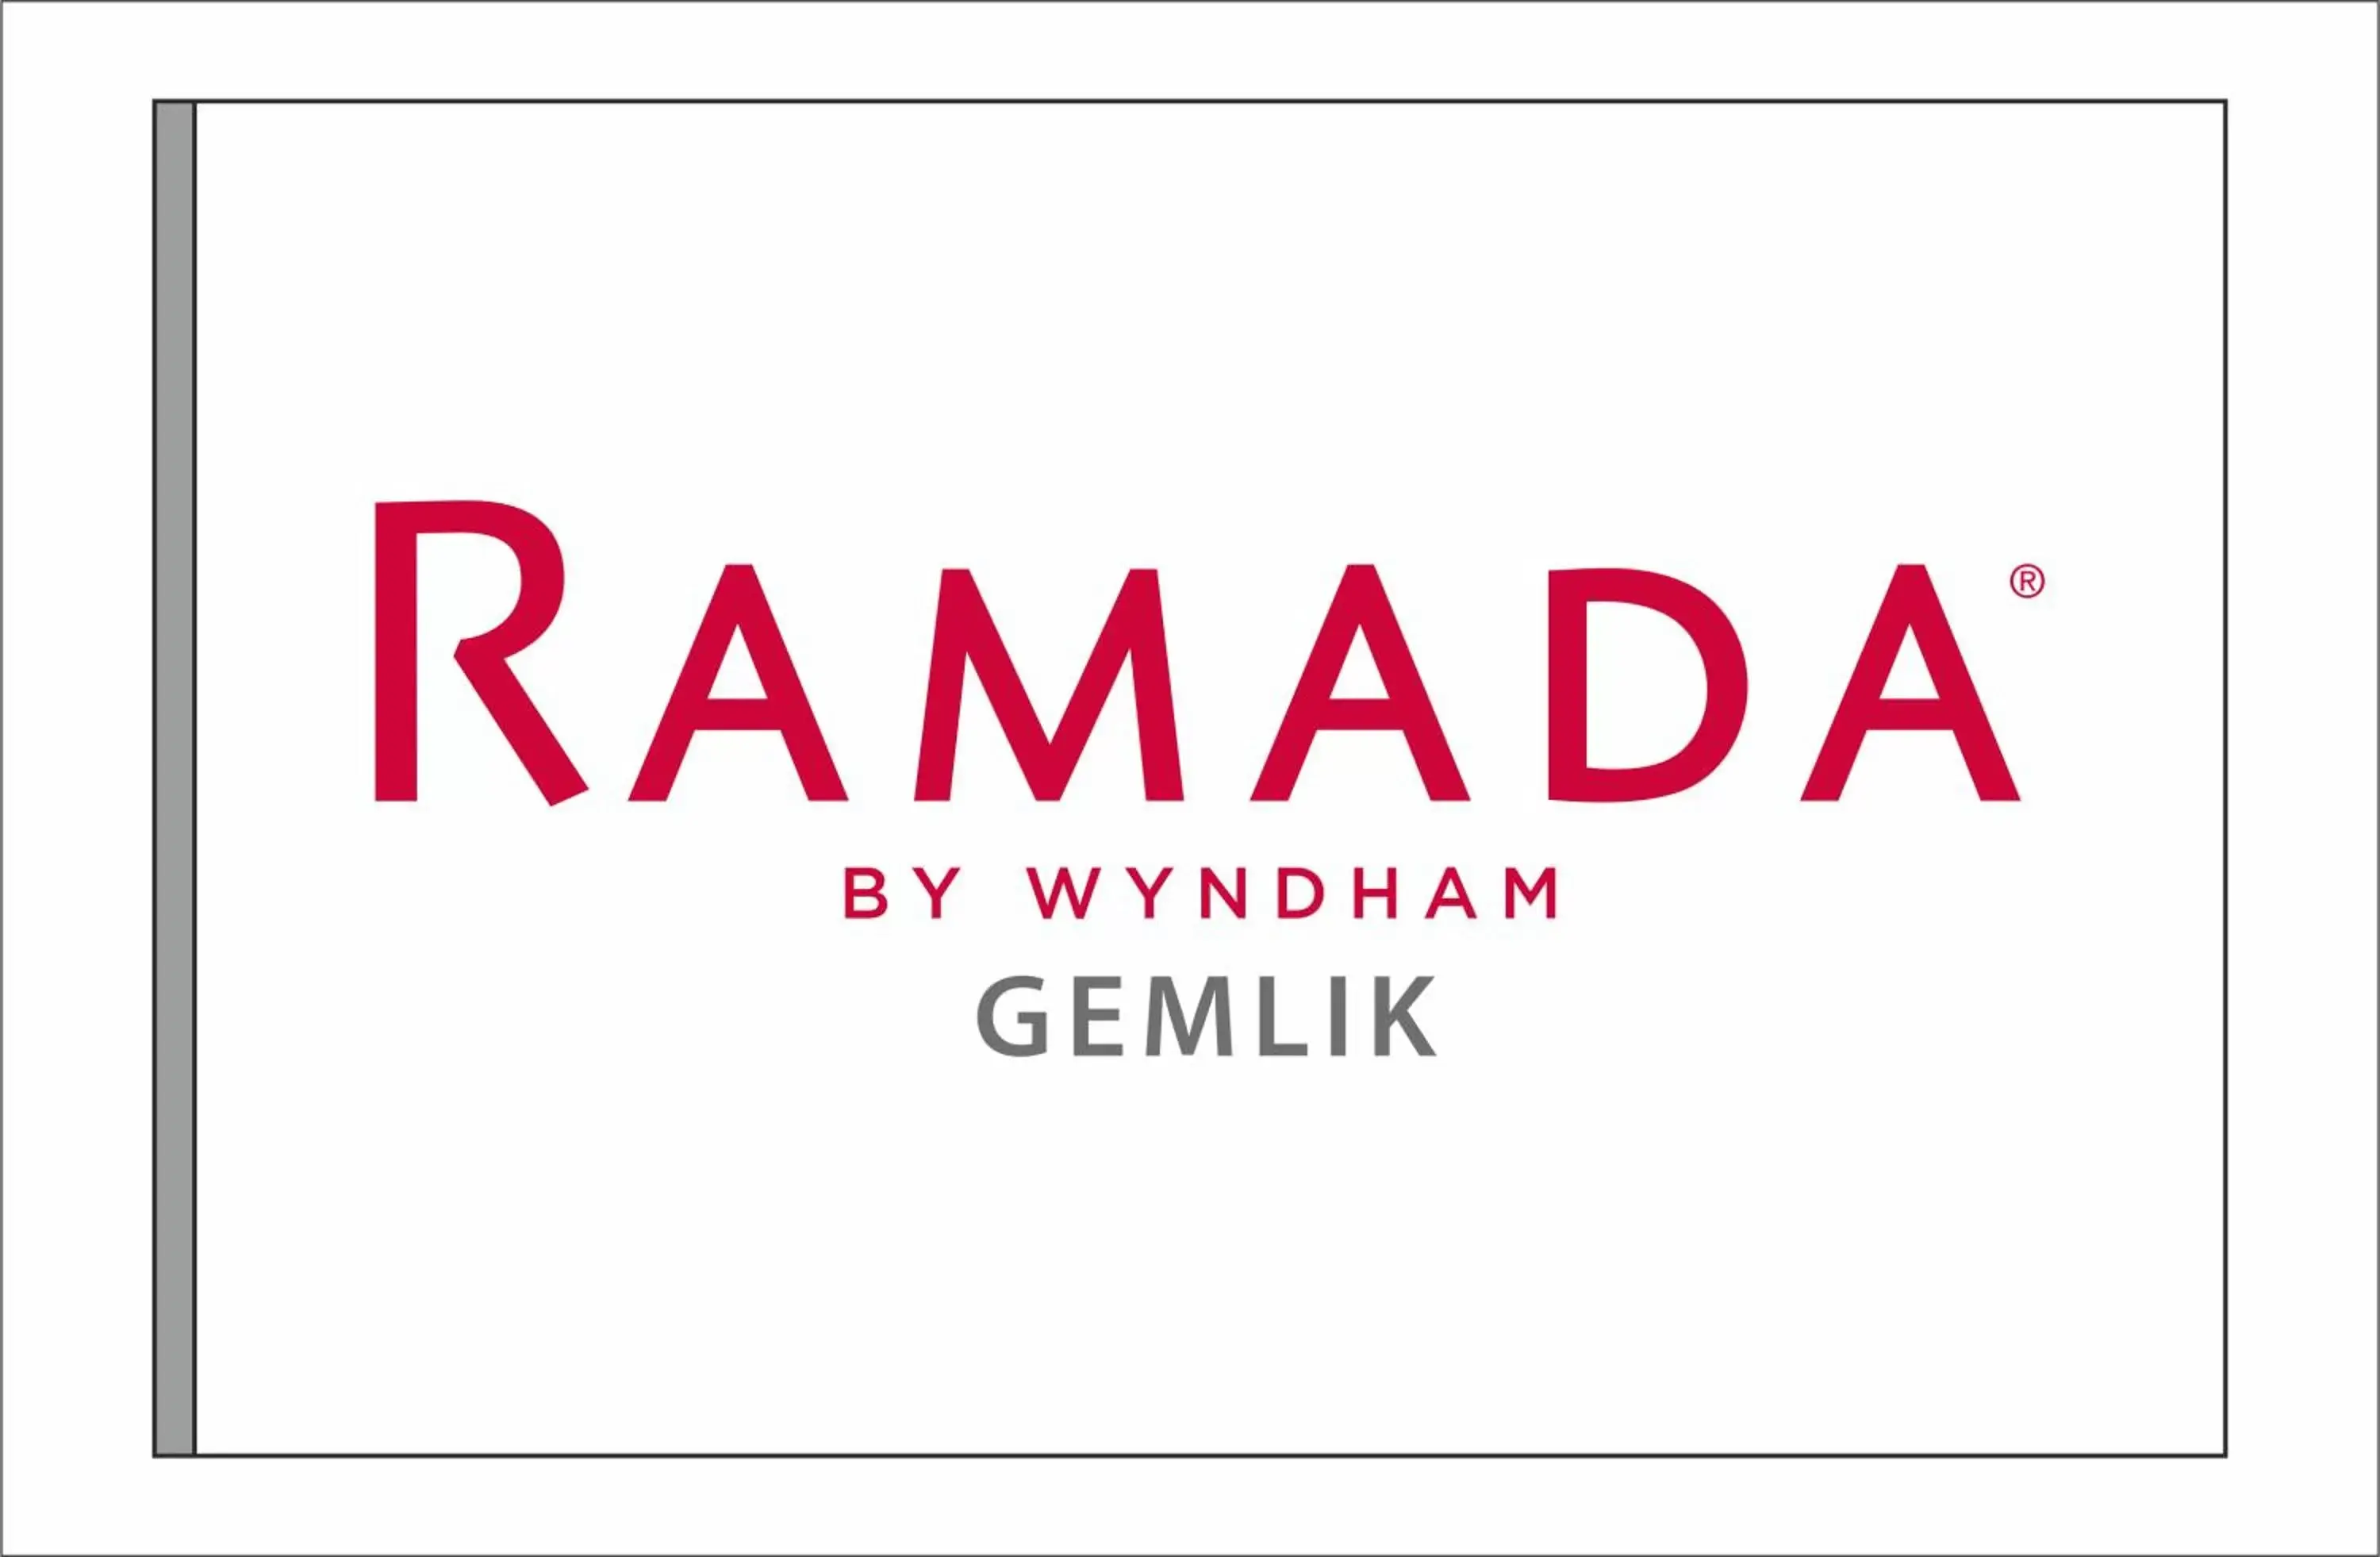 Breakfast in Ramada by Wyndham Gemli̇k